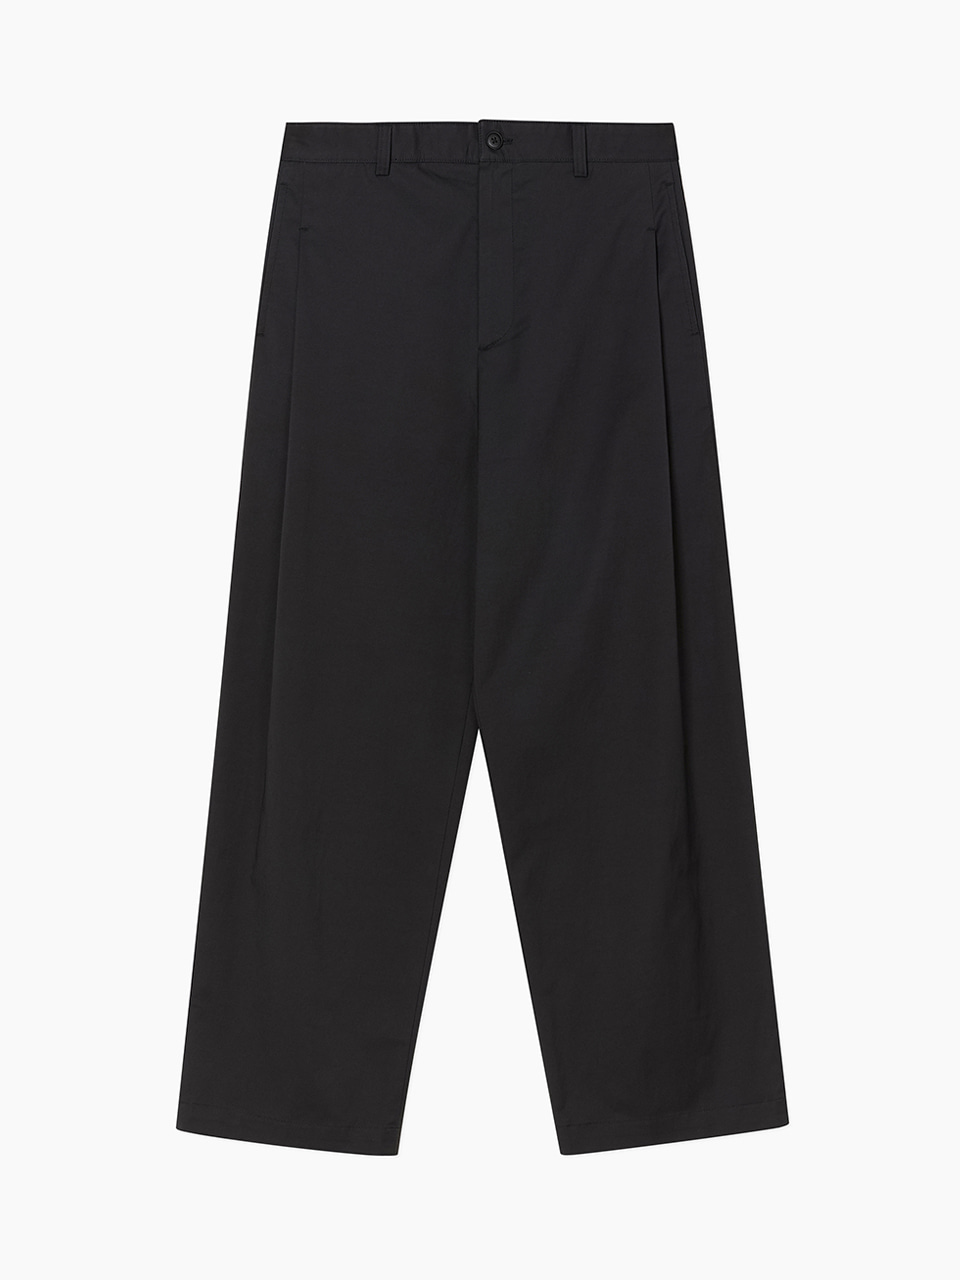 Twill Cotton Side Tuck Pants (Black)